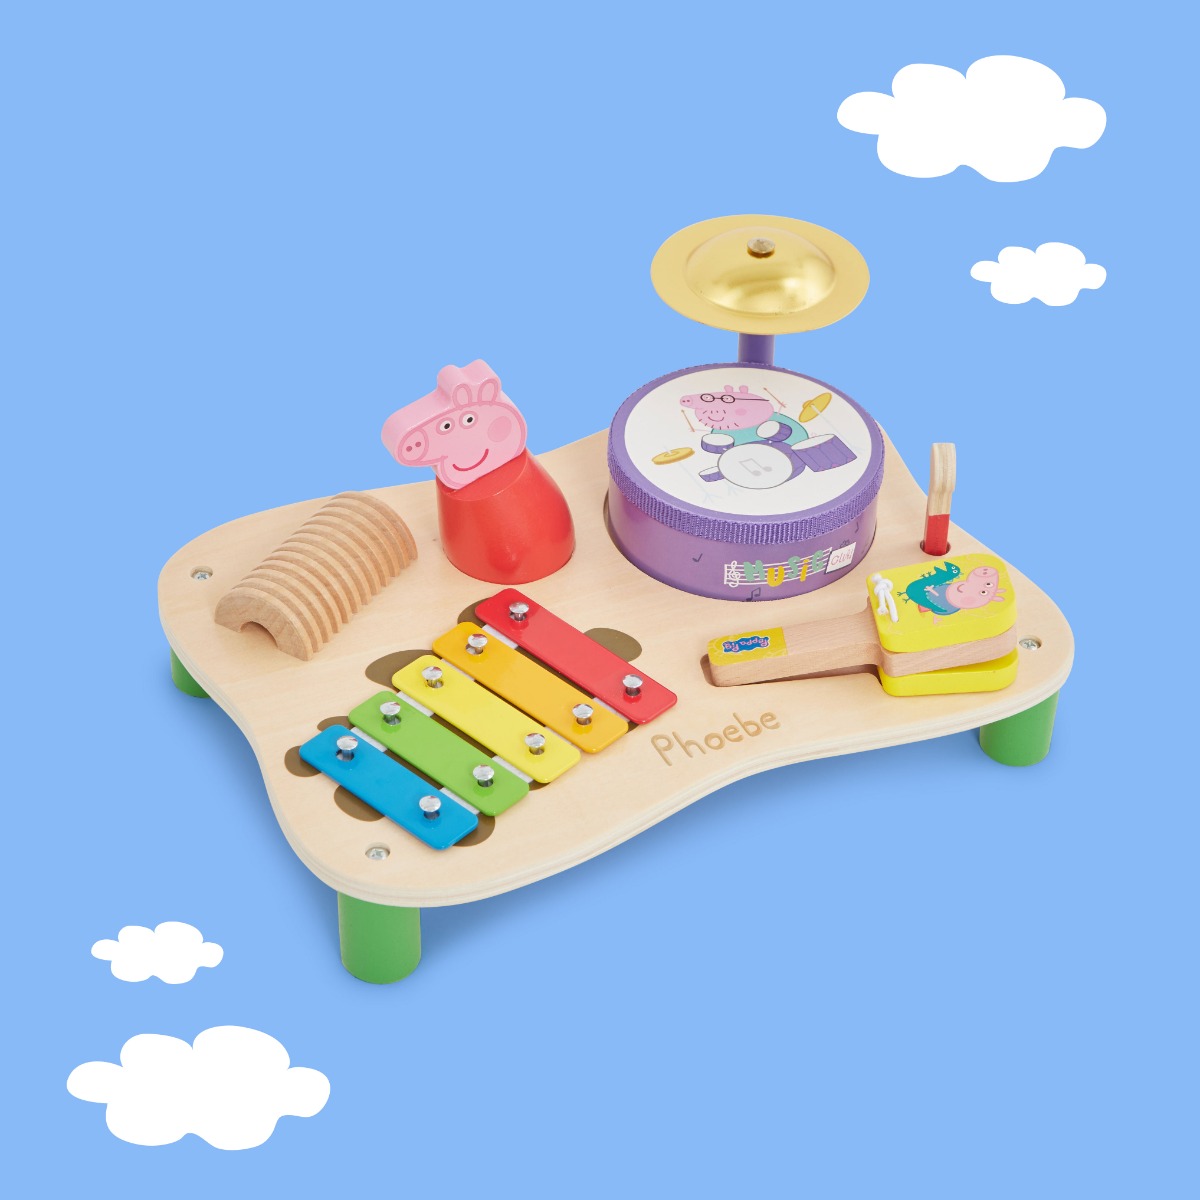 Personalised Peppa Pig Wooden Musical Table Playset